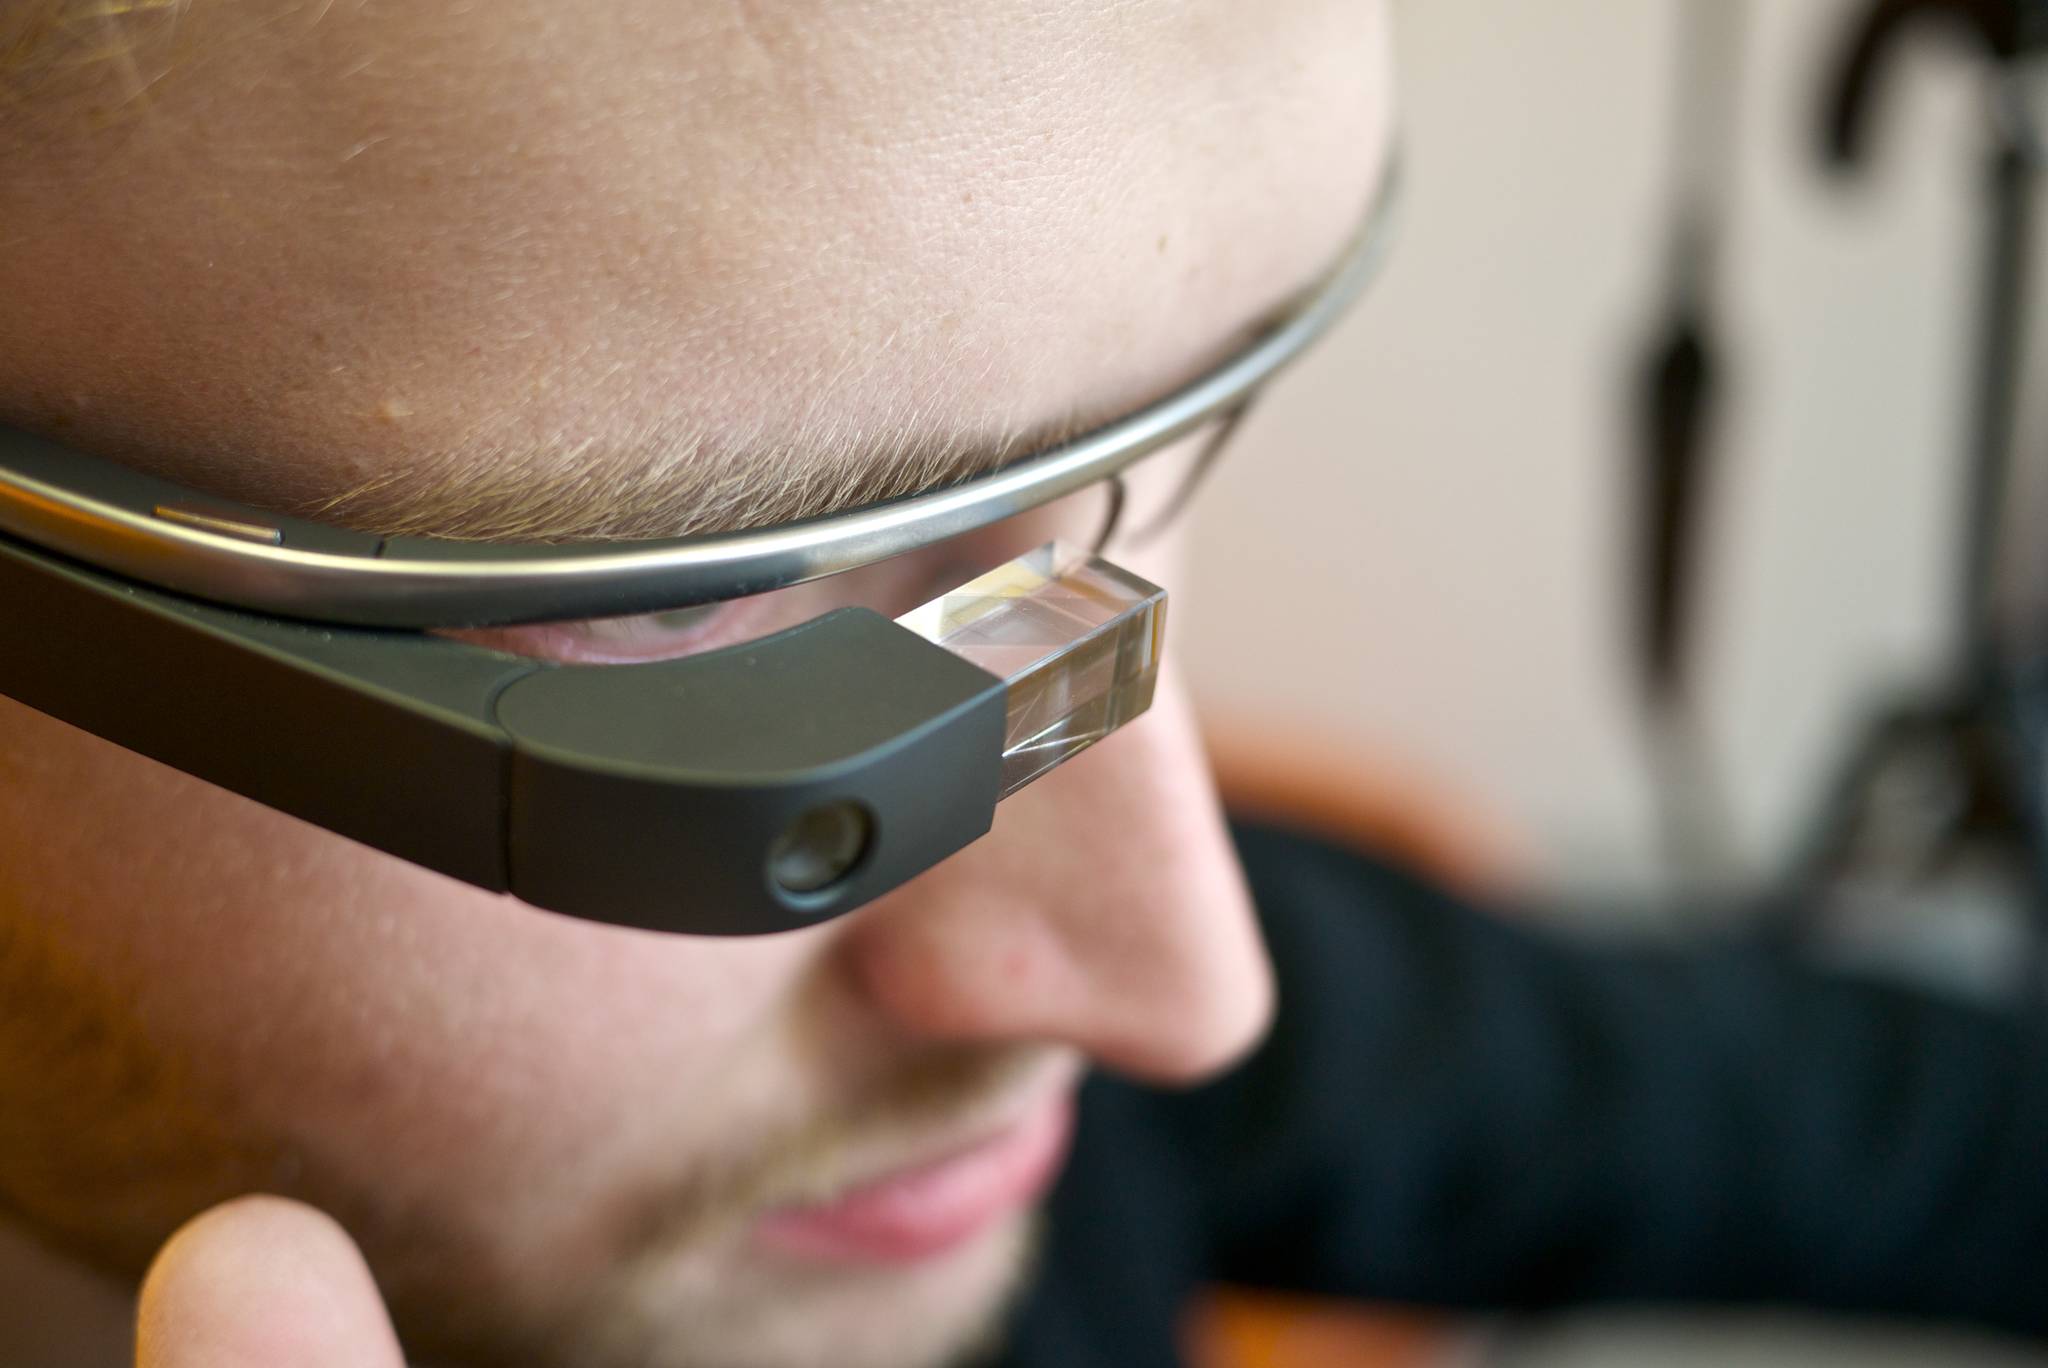 Google Glass enters the art museum